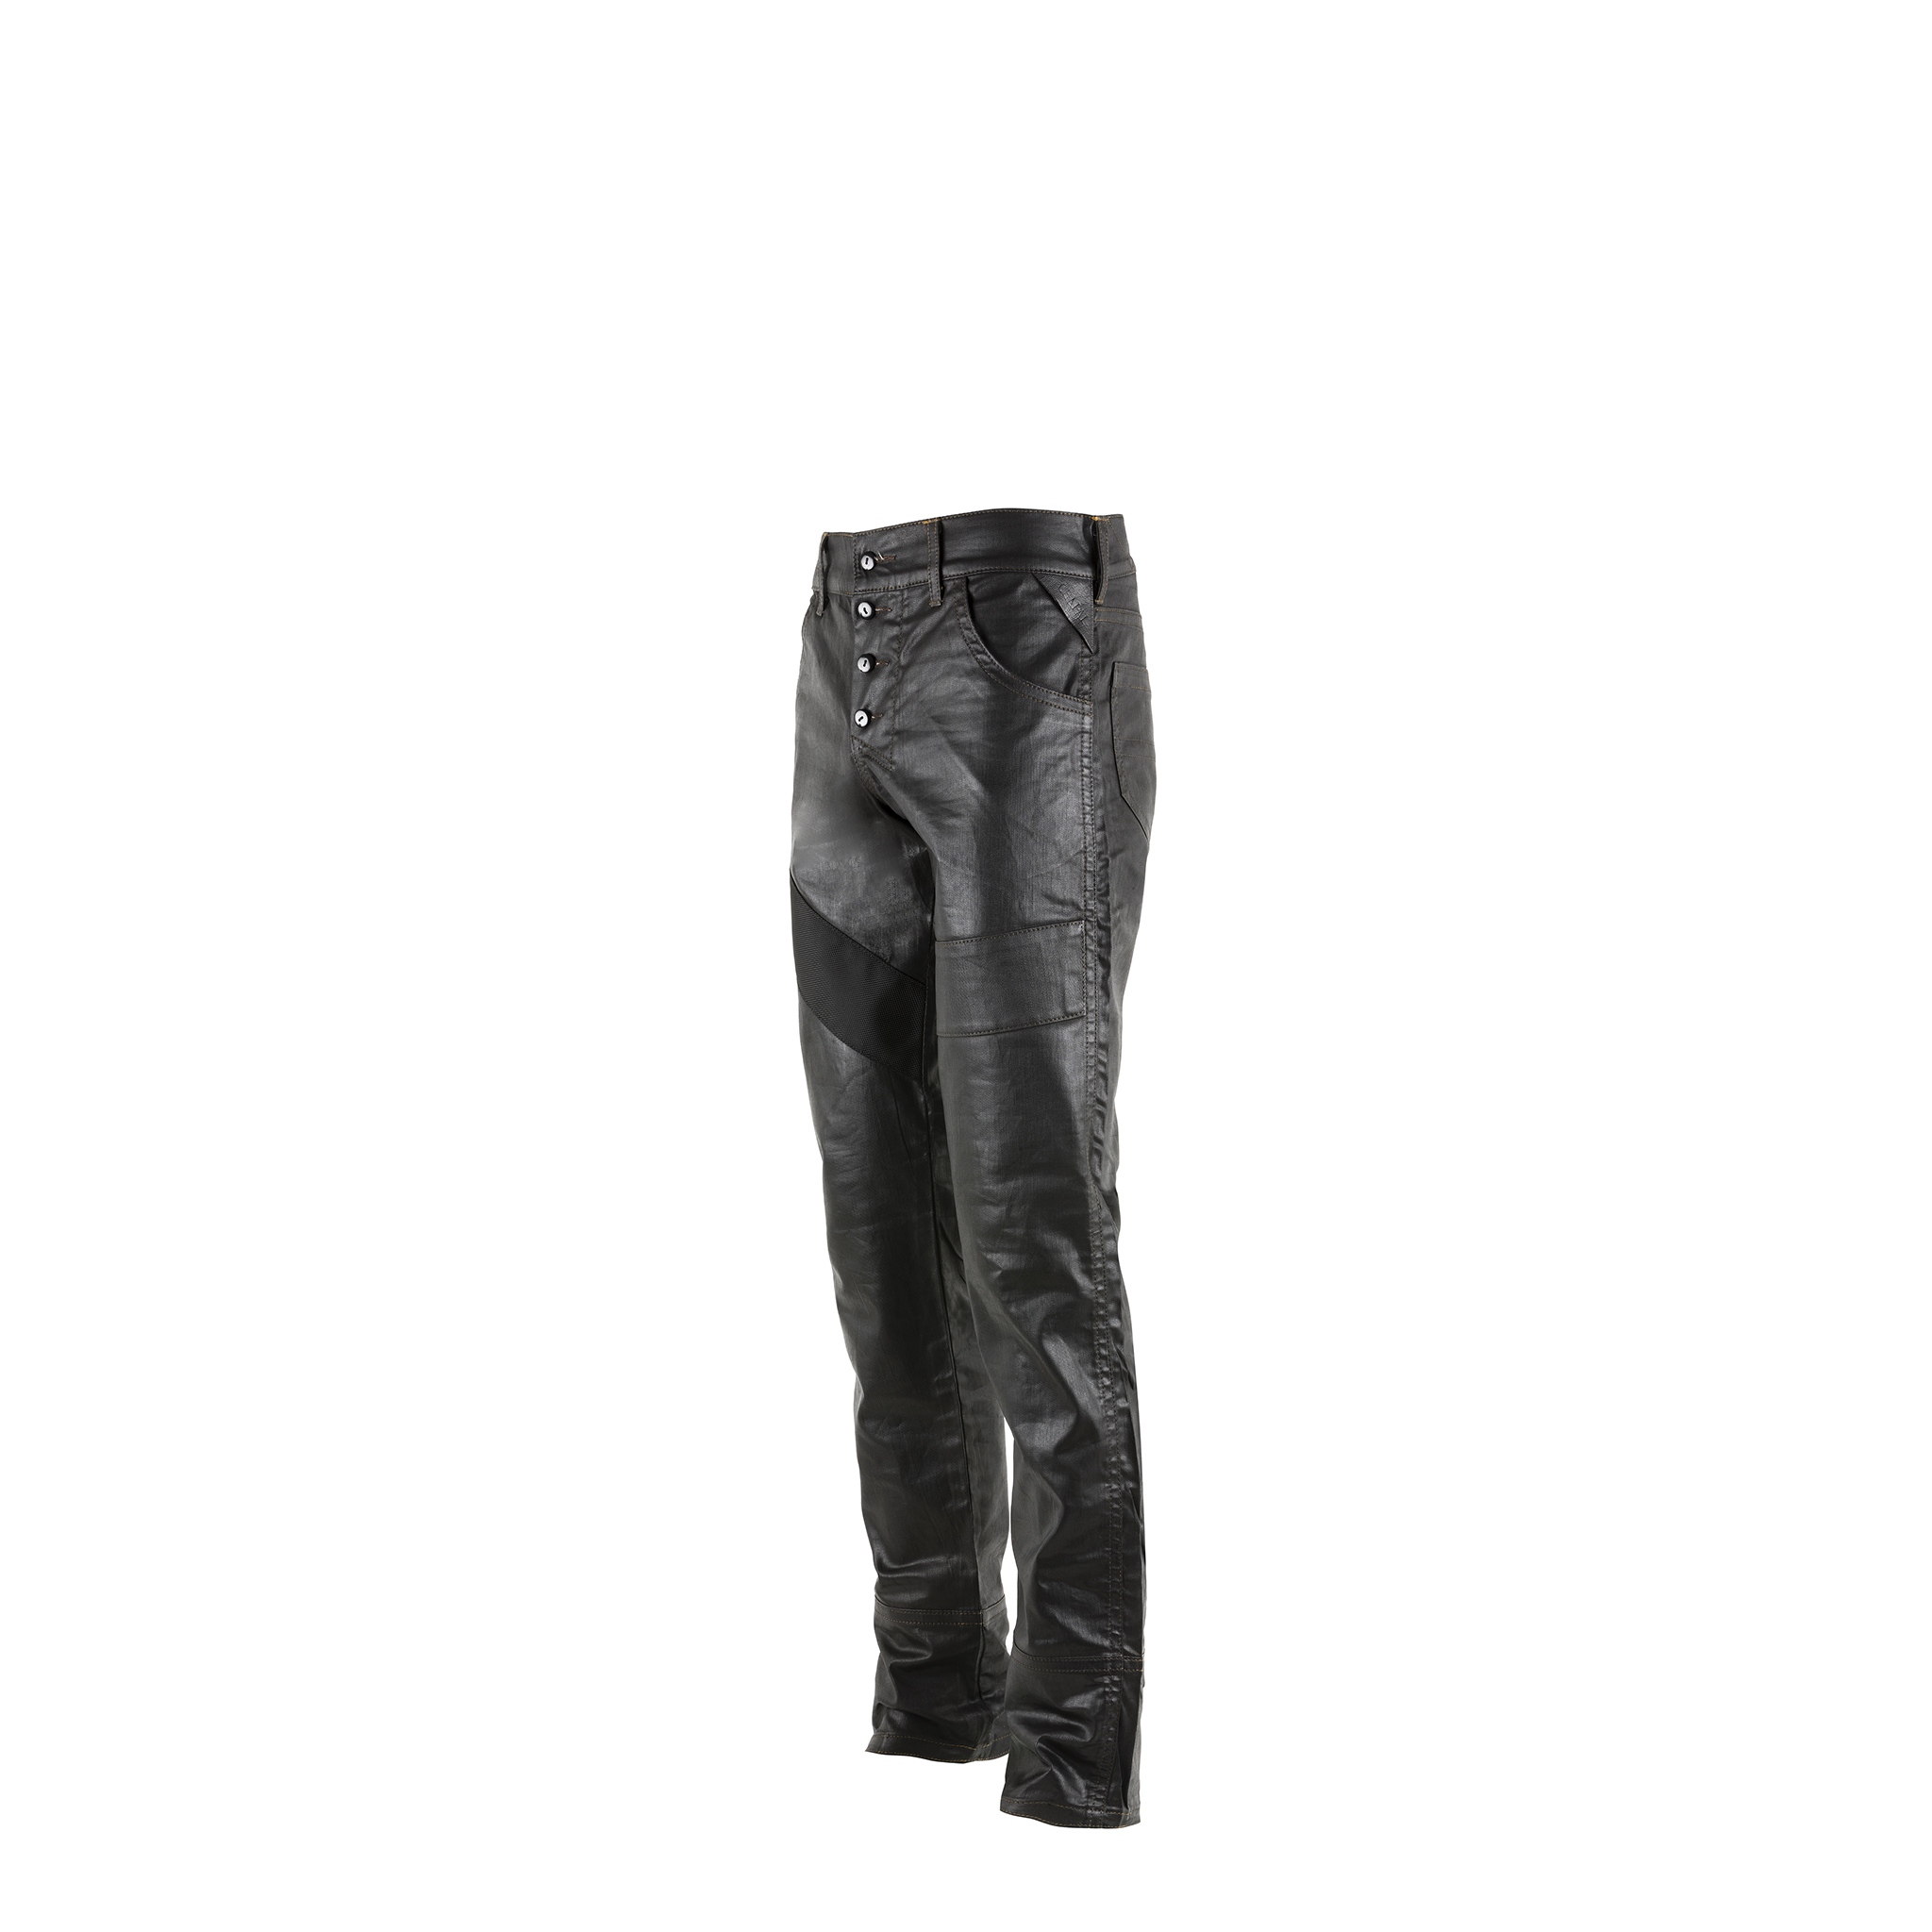 Jeans 2006A - Nappa finish - Black color